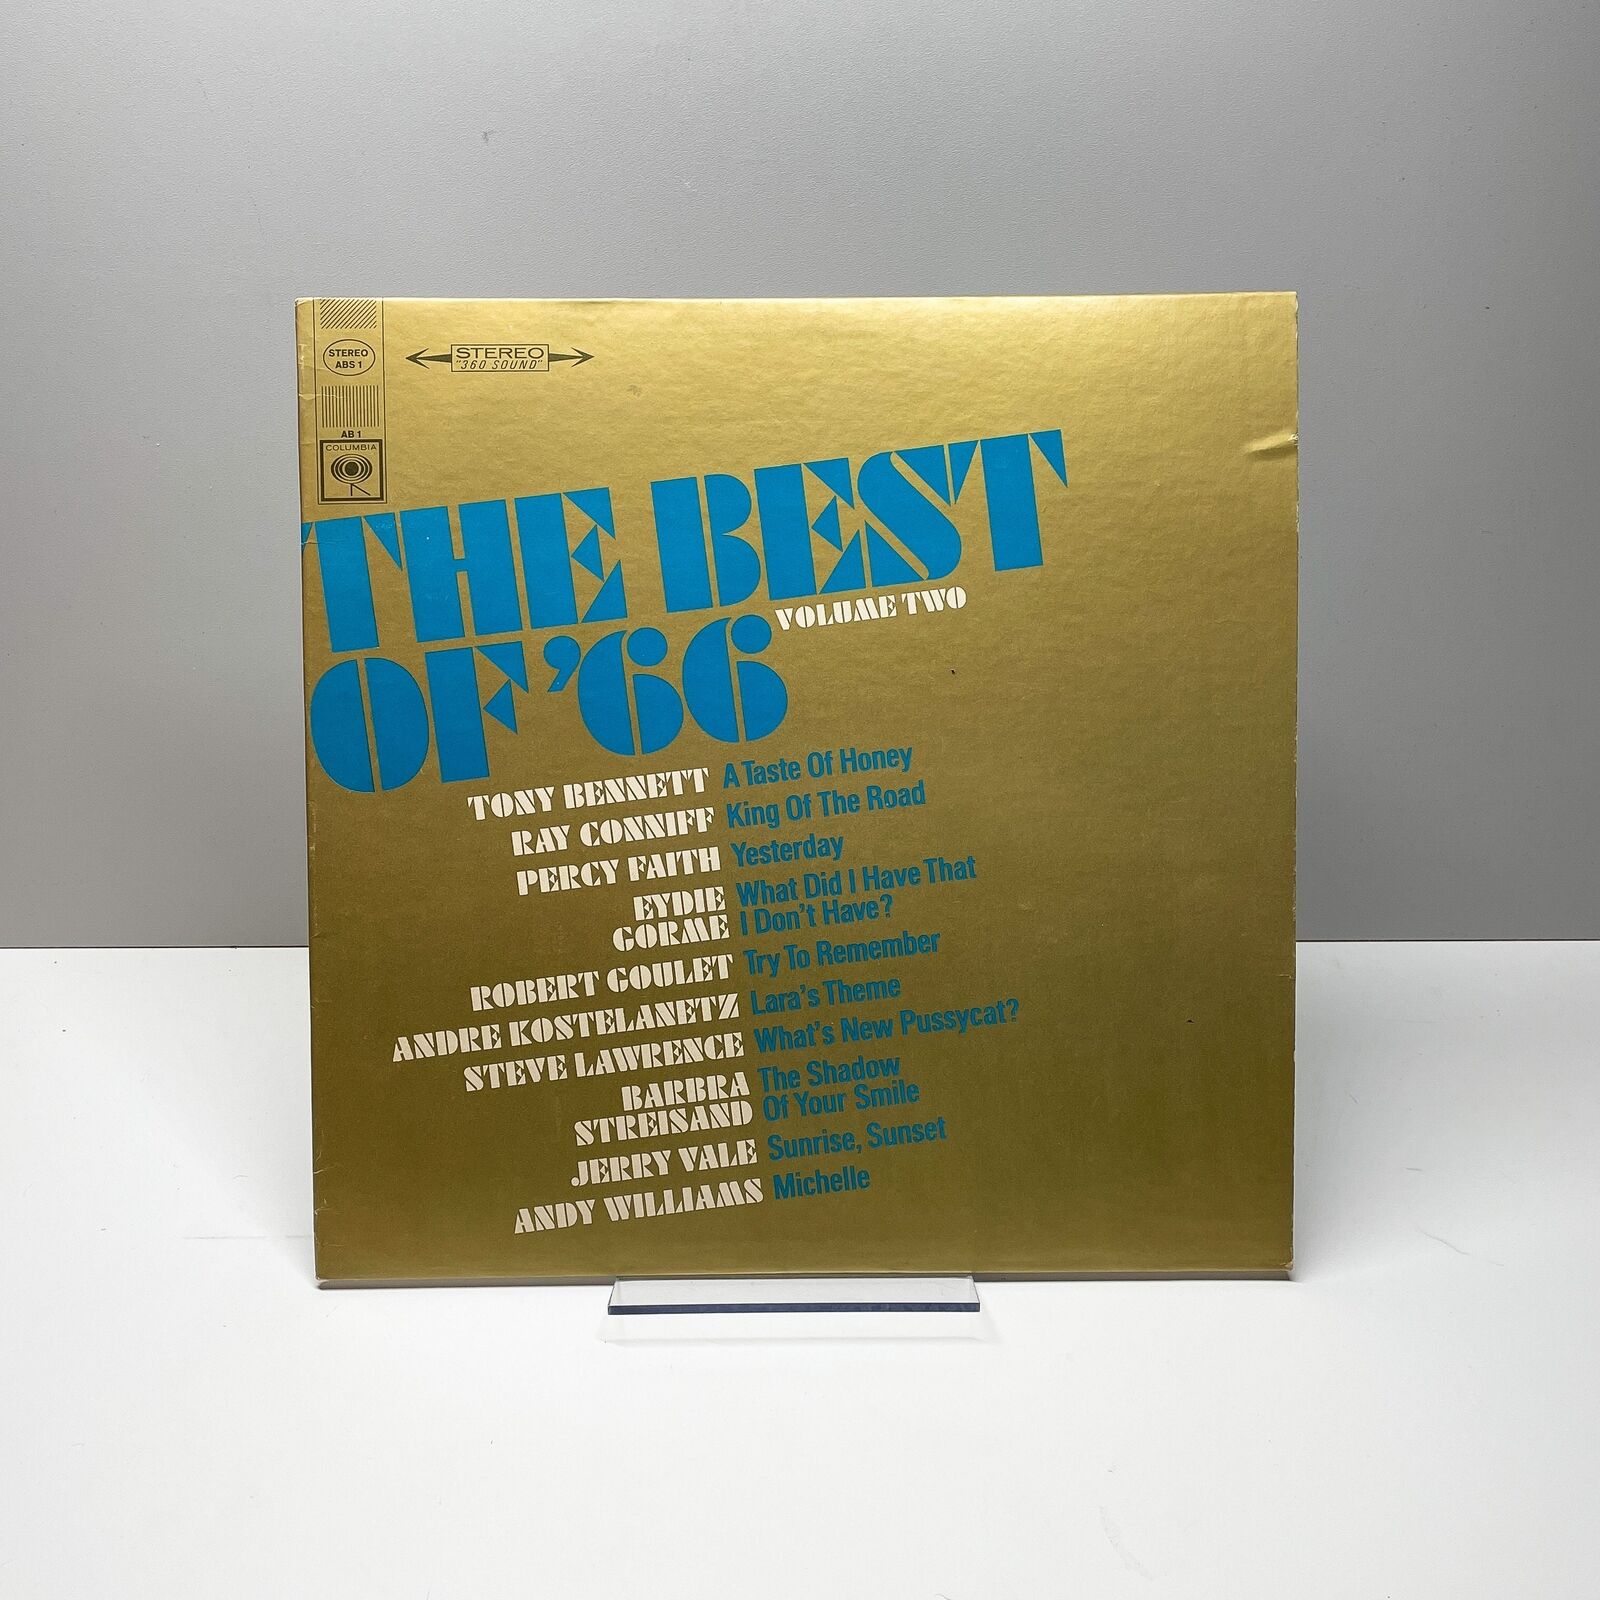 The best of \'66 (Tony Bennett, Barbra Streisand, Andy Williams) - Vinyl LP Reco